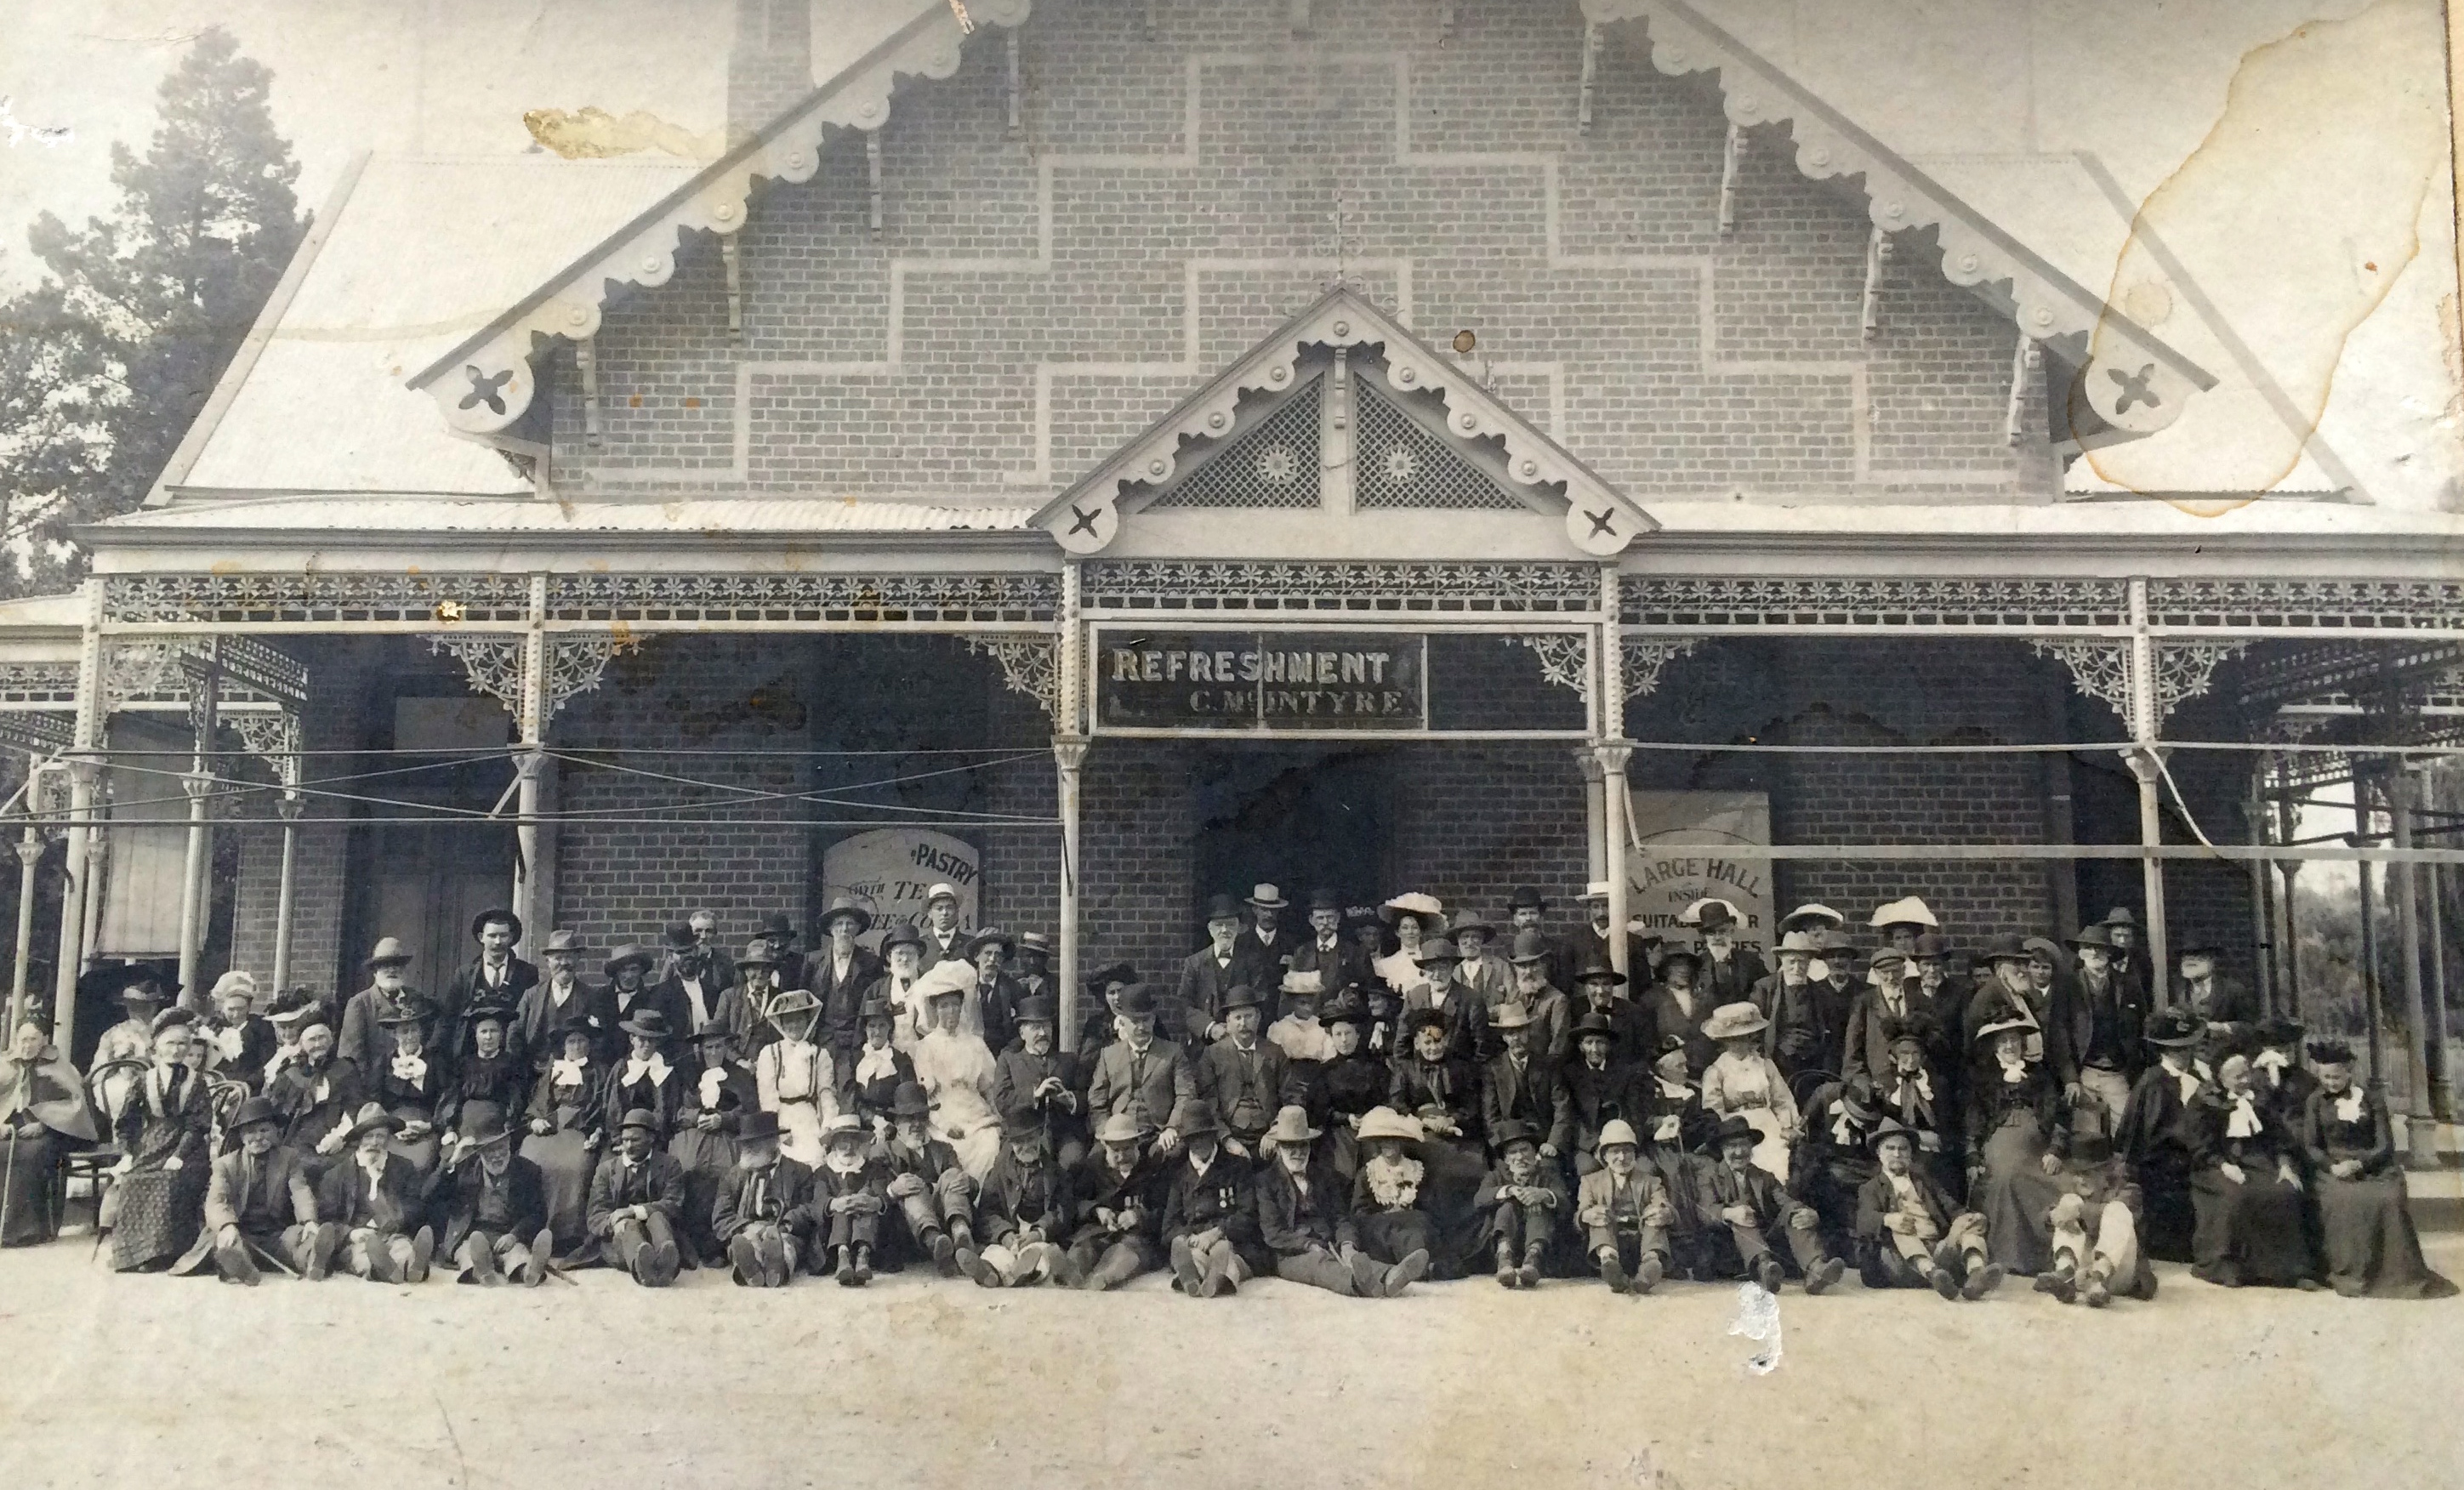 Ballarat Benevolent Asylum from postcard - Ballarat Historical Society